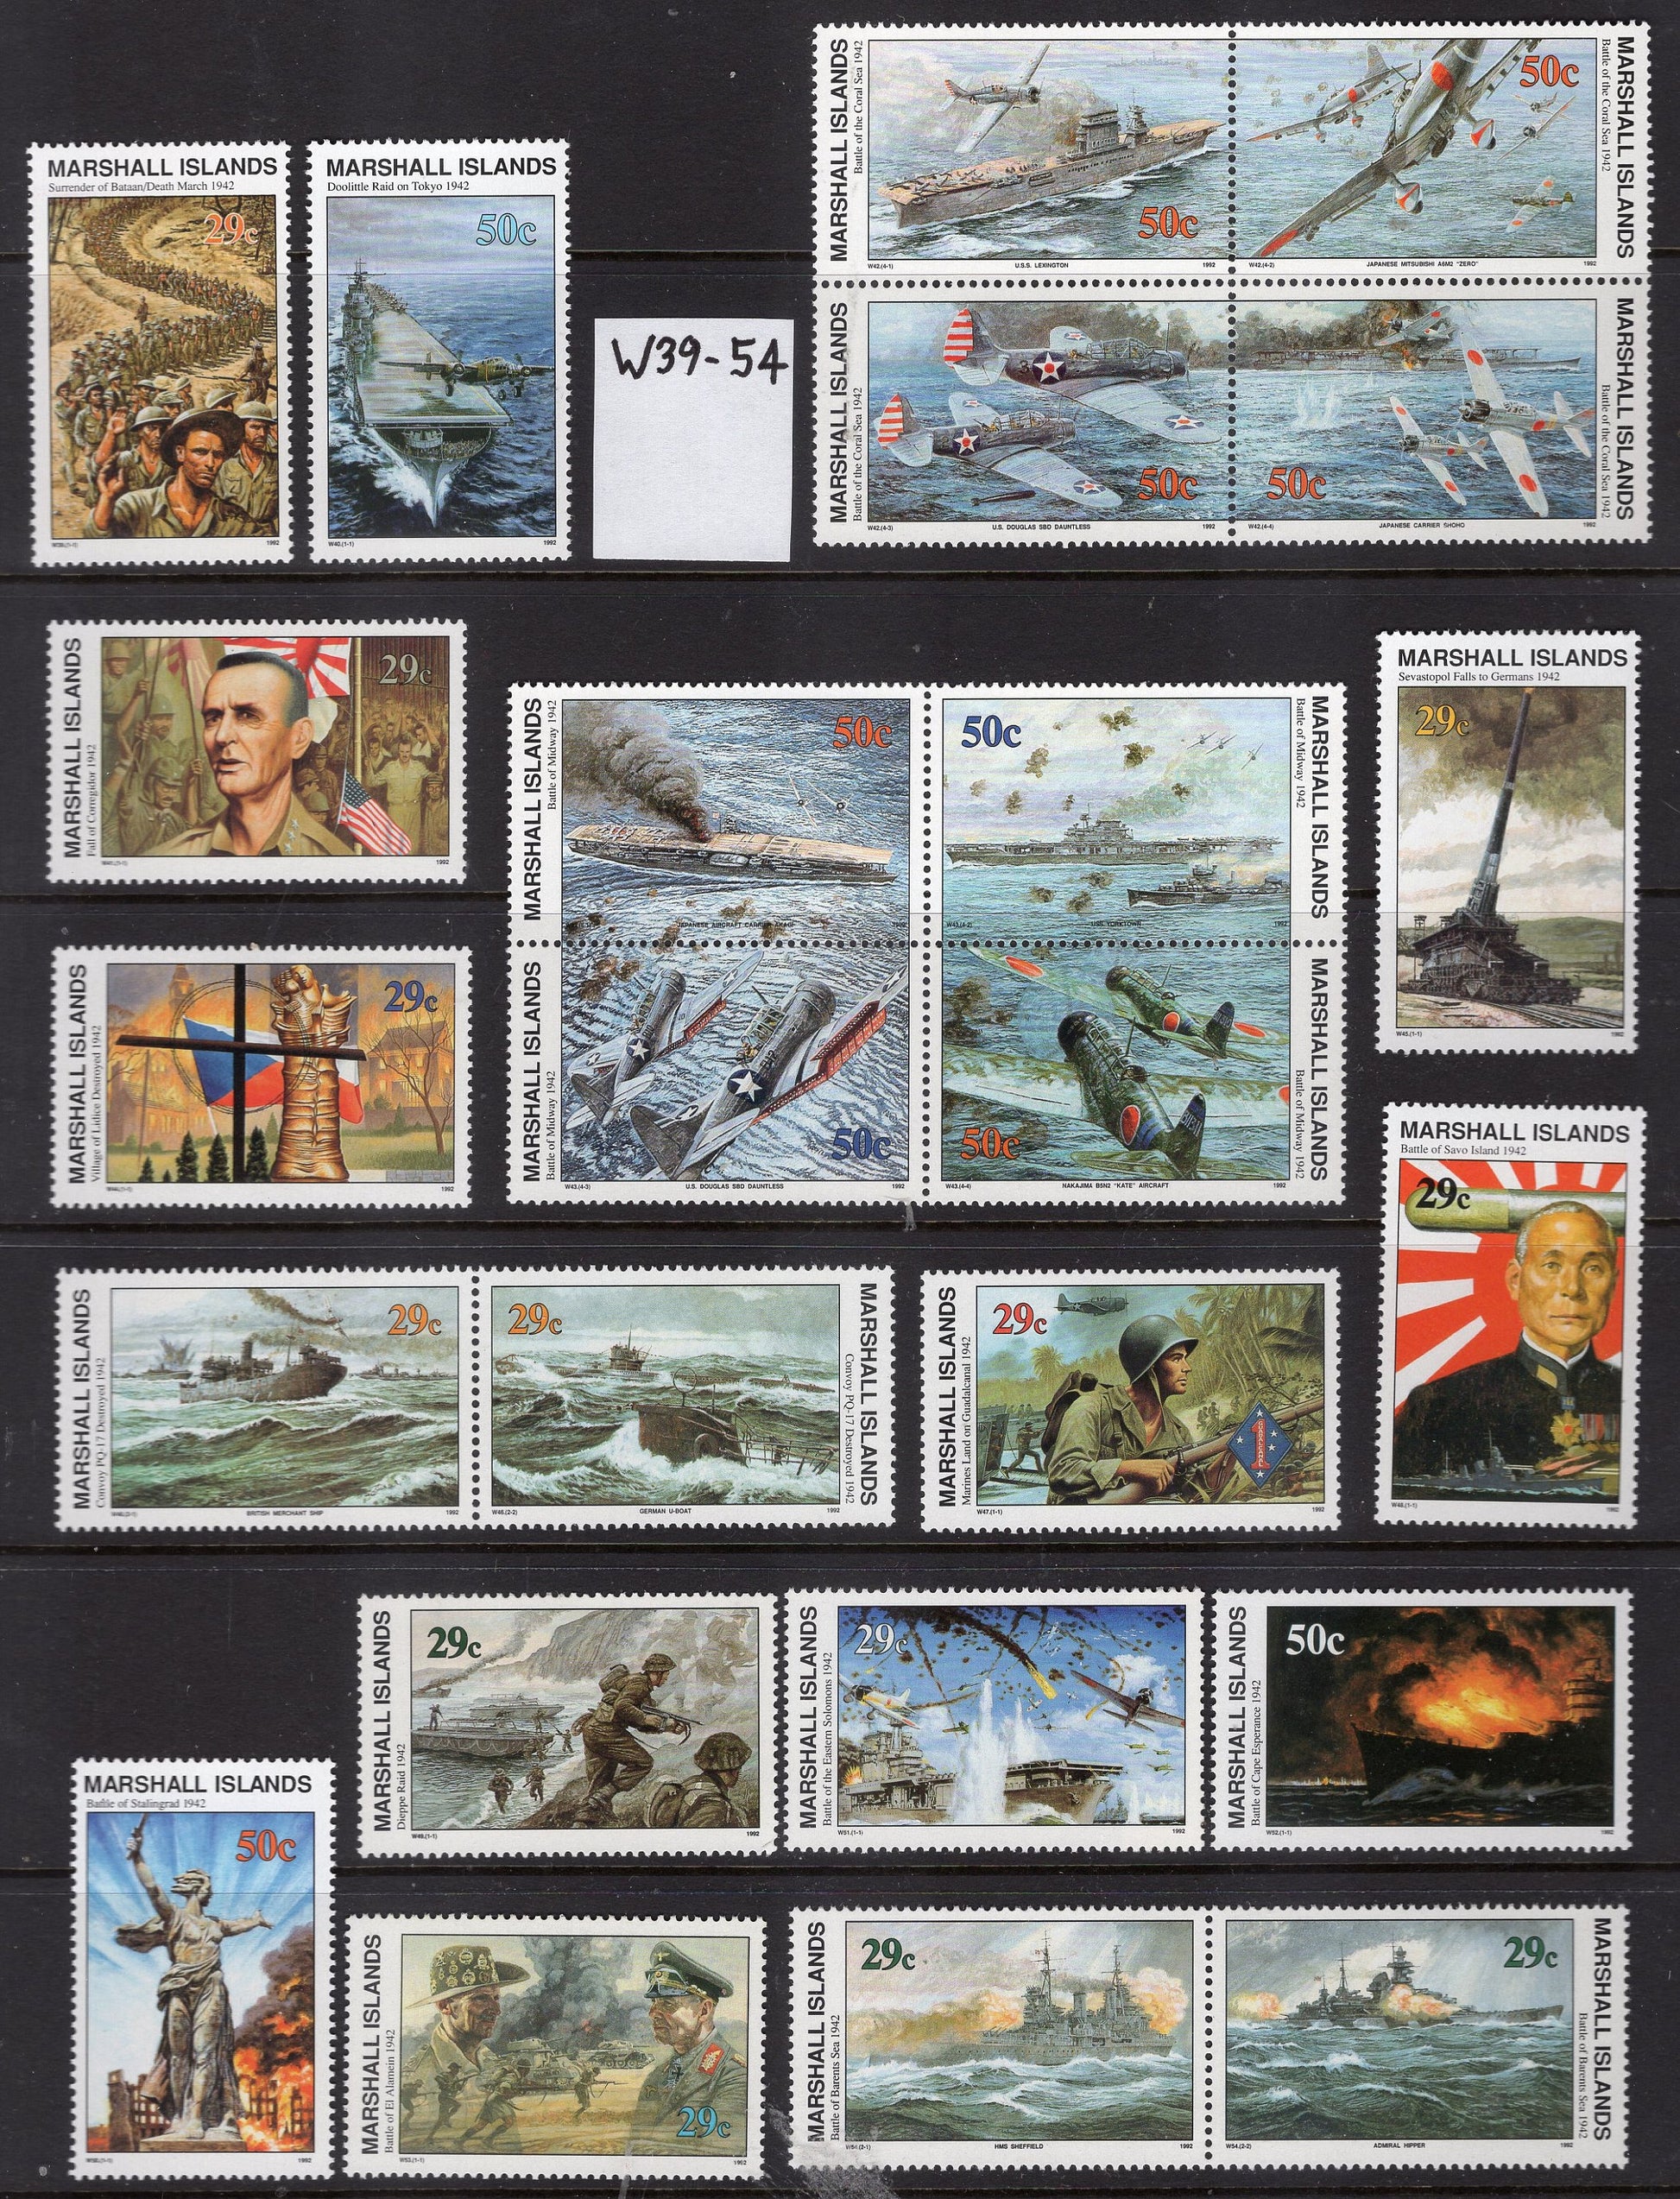 WORLD WAR II WW2 History 1939-1945 Hiroshima Iwo Jima shown on 155 Marshall Islands VFNHStamps - Vintage1989-95 - sWW2 -